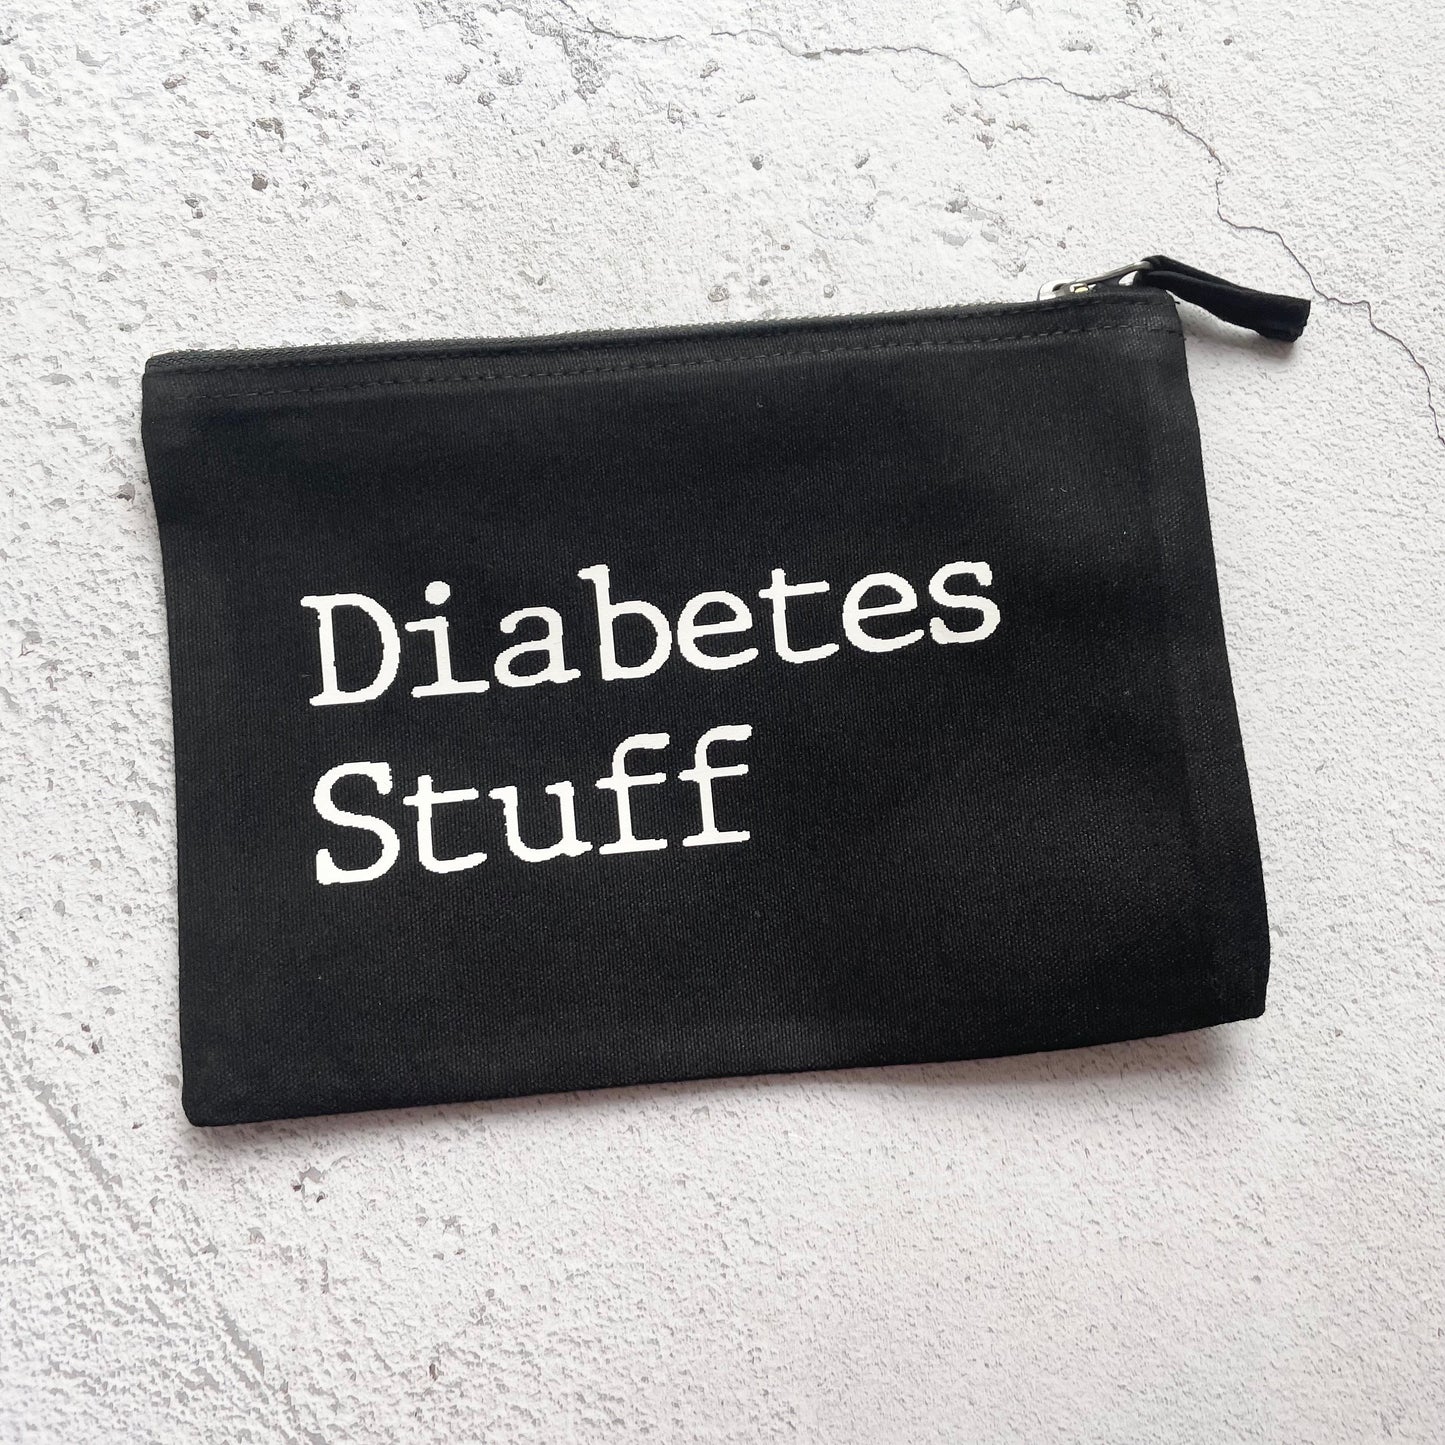 Diabetes stuff bag, personalised diabetes medicines case, insulin case, type 1 diabetes meds bag, diabetes essentials bag